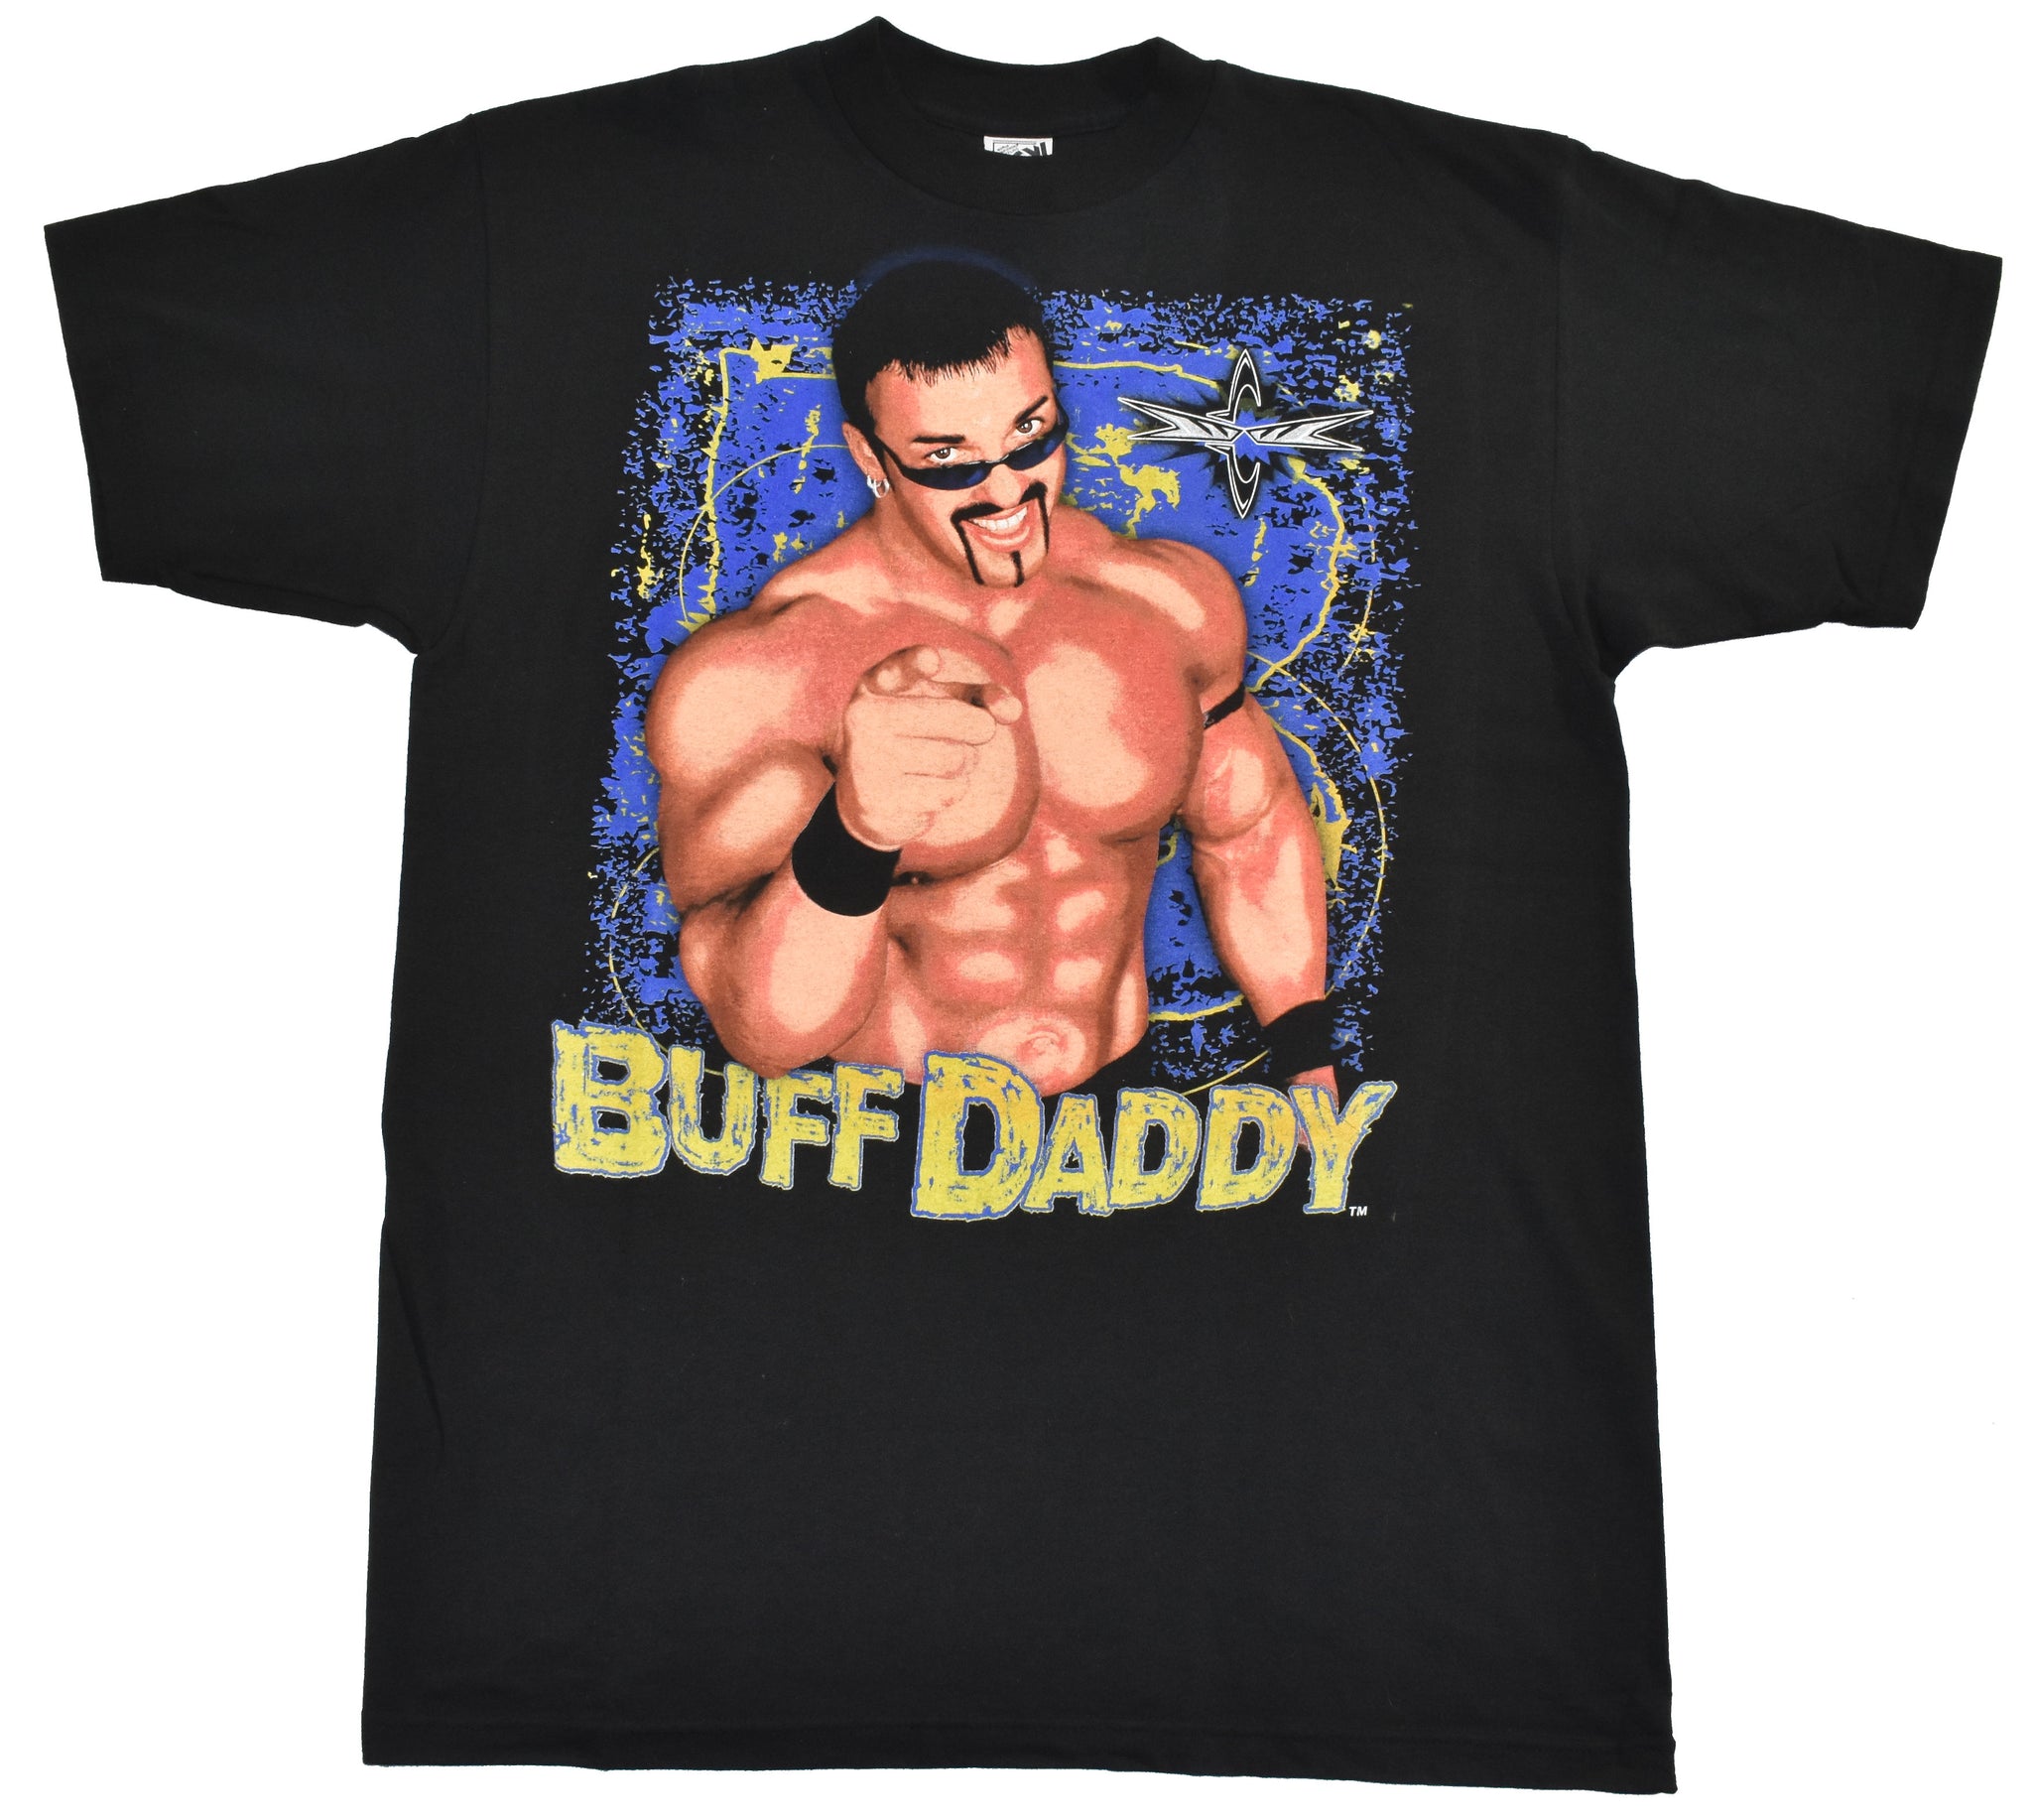 1998 DS WCW Buff Bagwell Buff Daddy Shirt Size X-Large